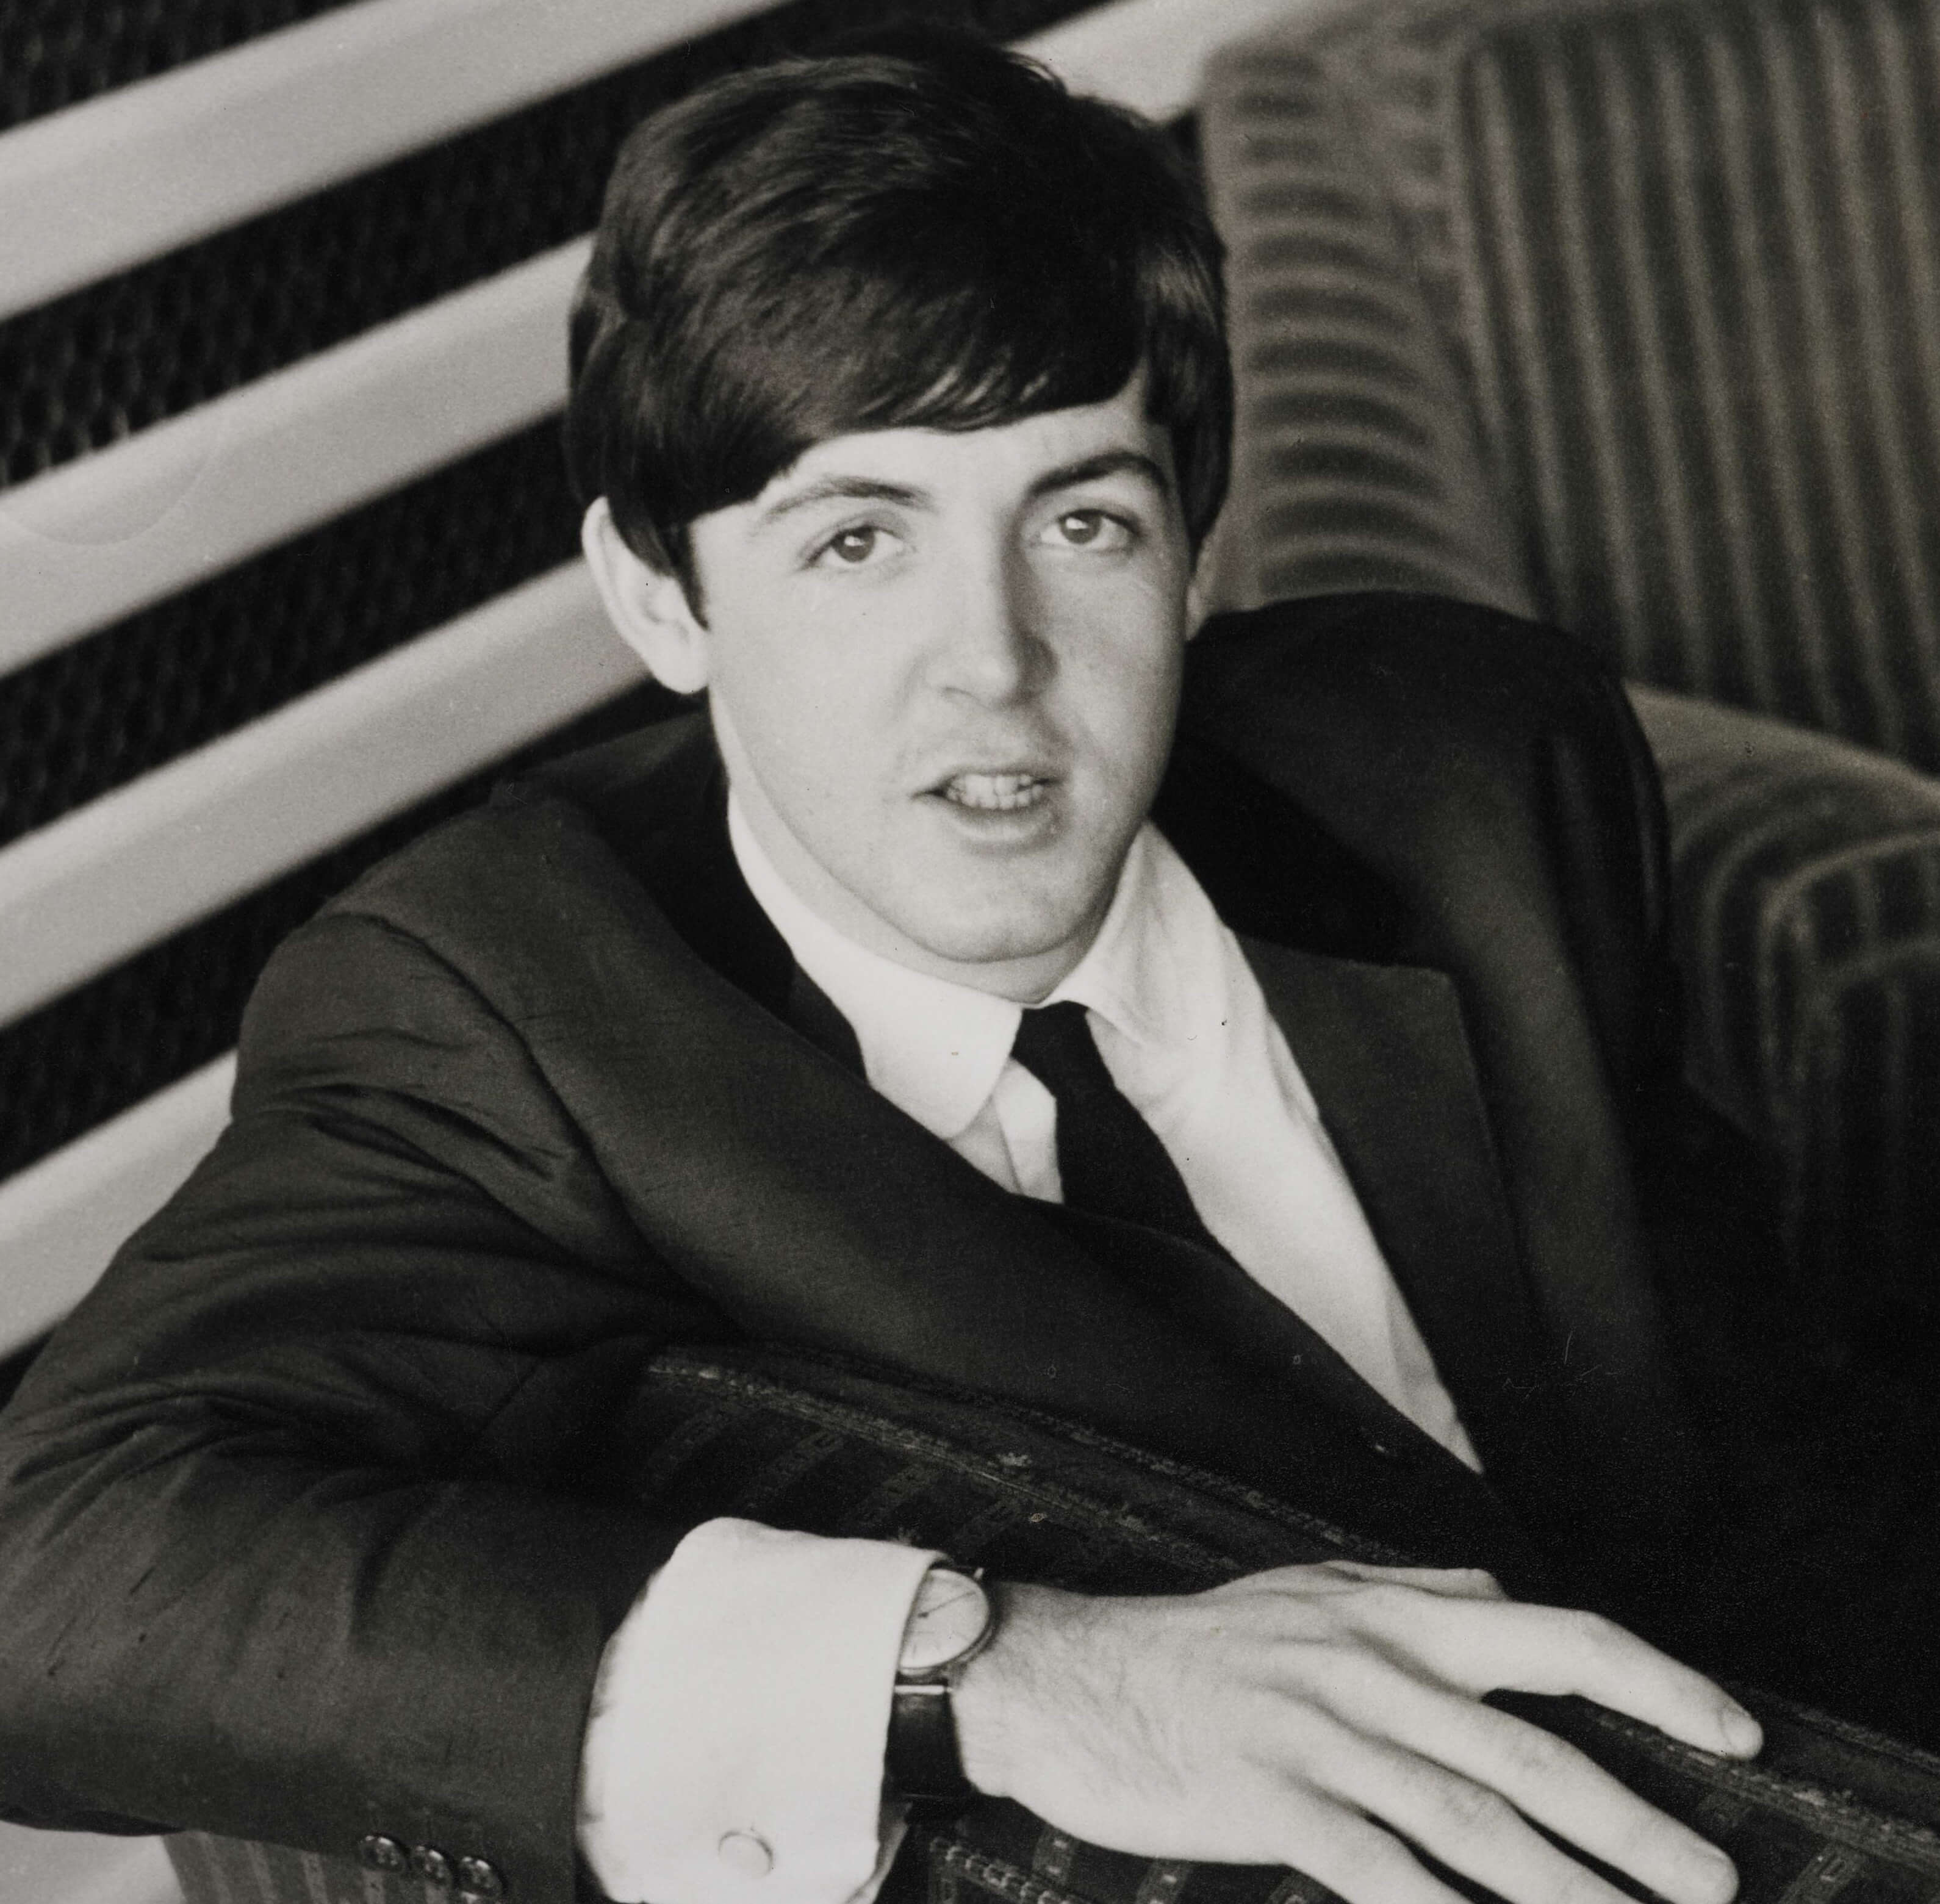 Paul McCartney in a suit